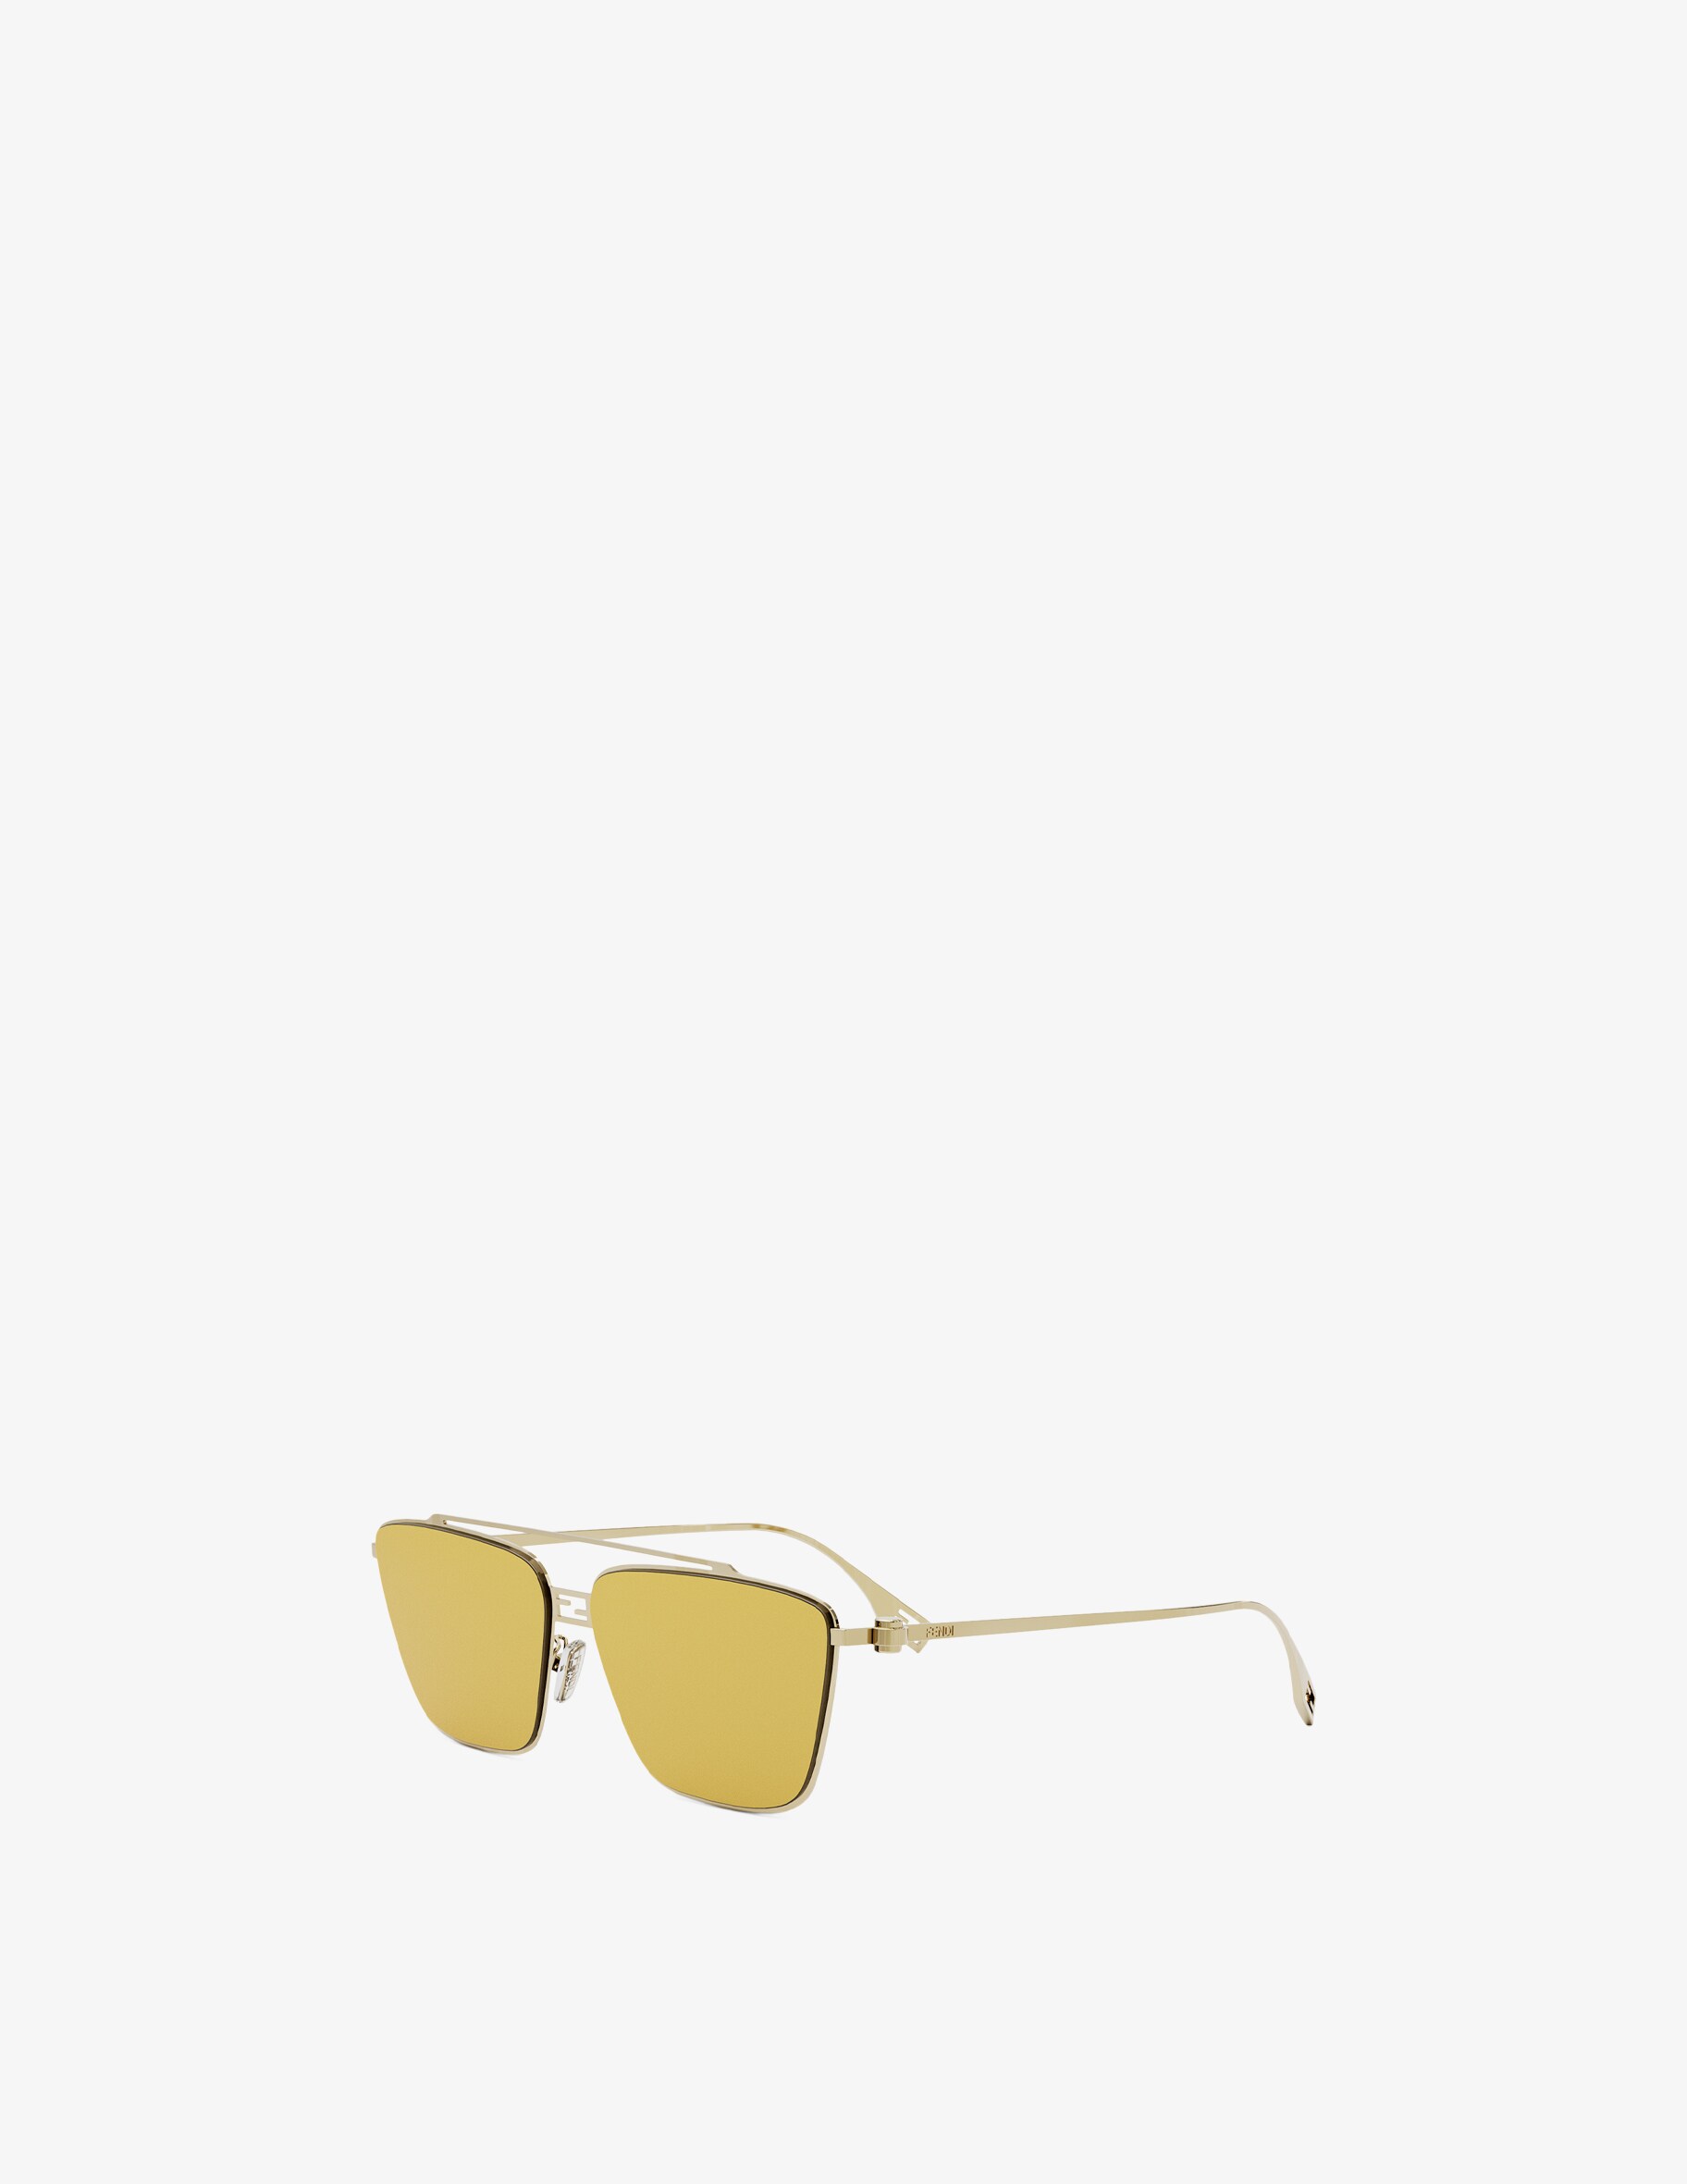 цена Солнцезащитные очки FE40110U в квадратной оправе Fendi, цвет Shiny Endura Gold